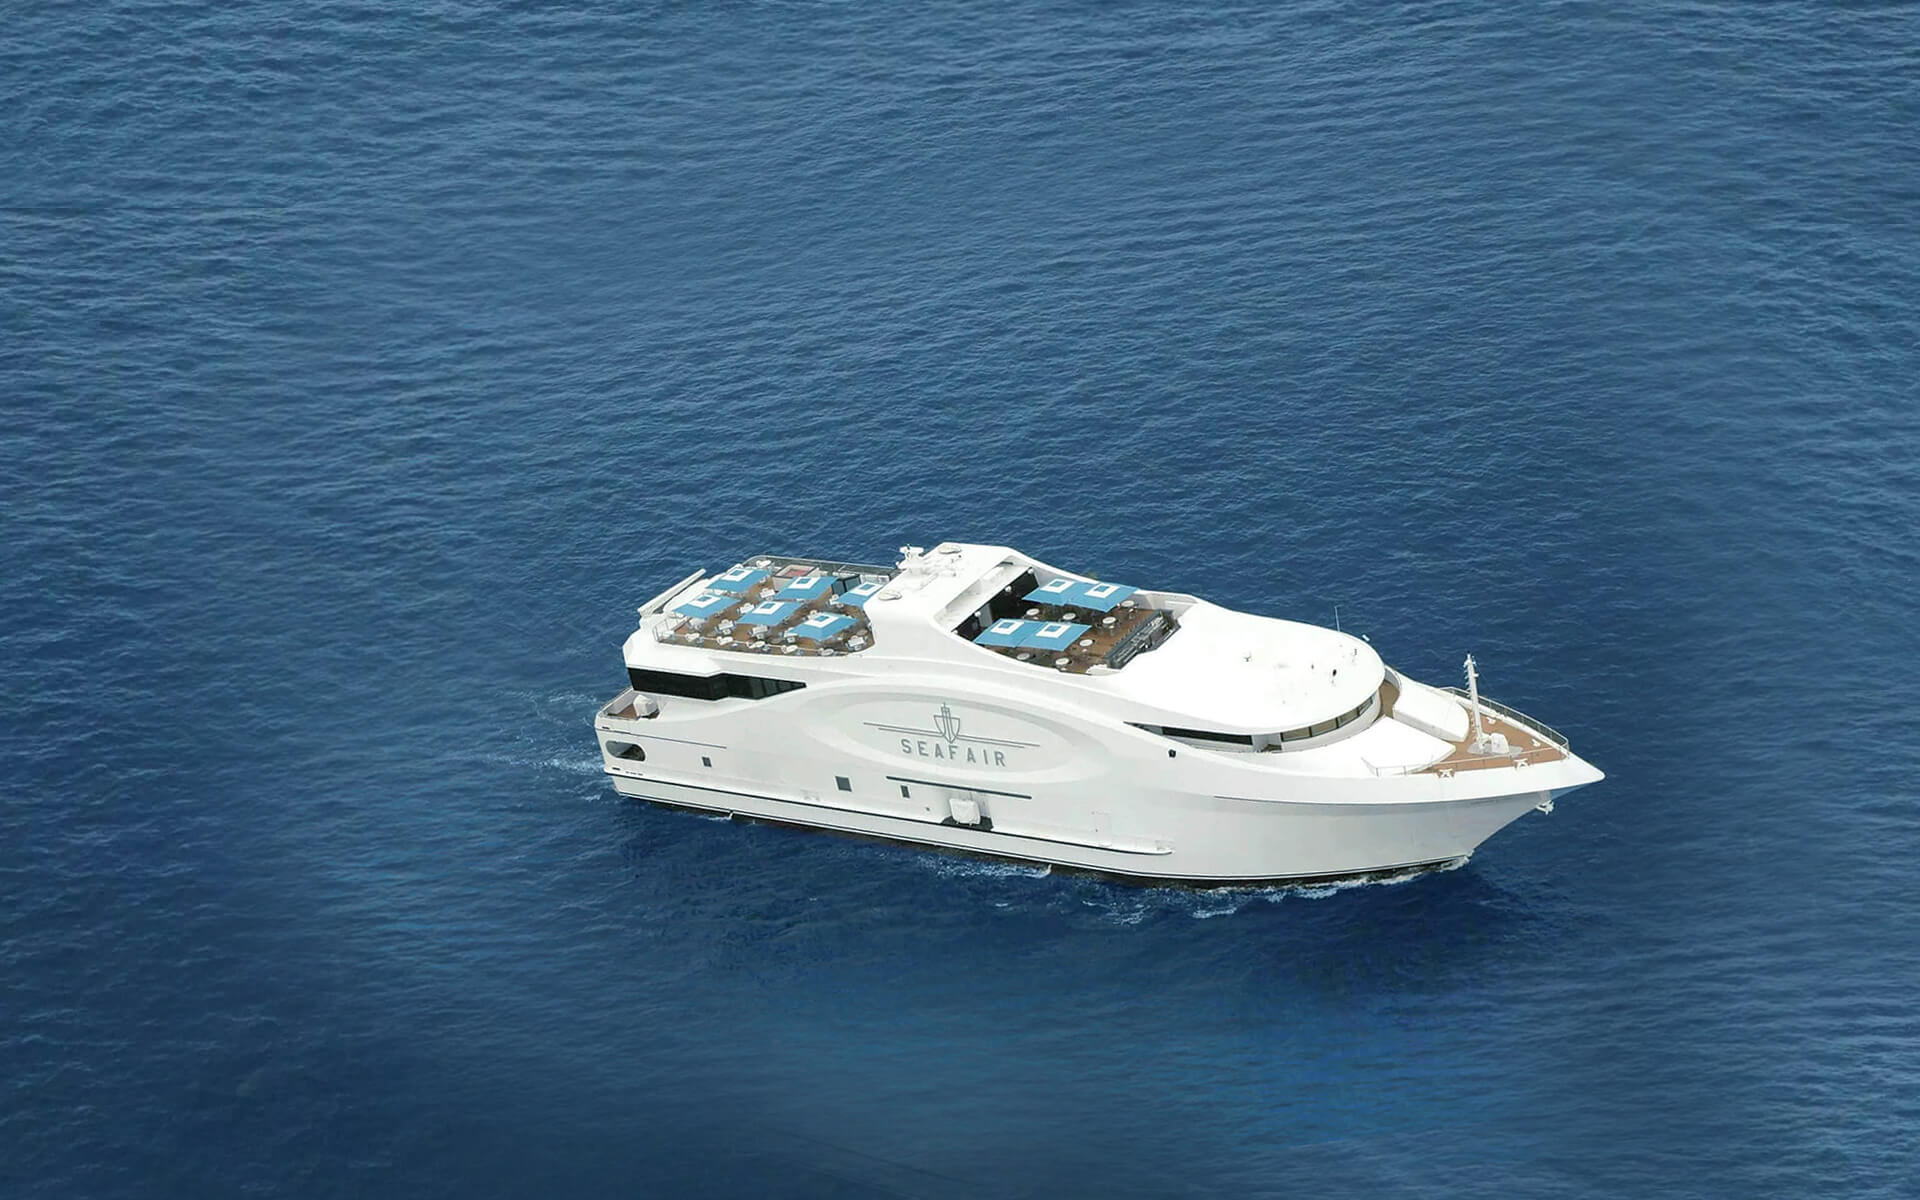 seafair mega yacht miami fl